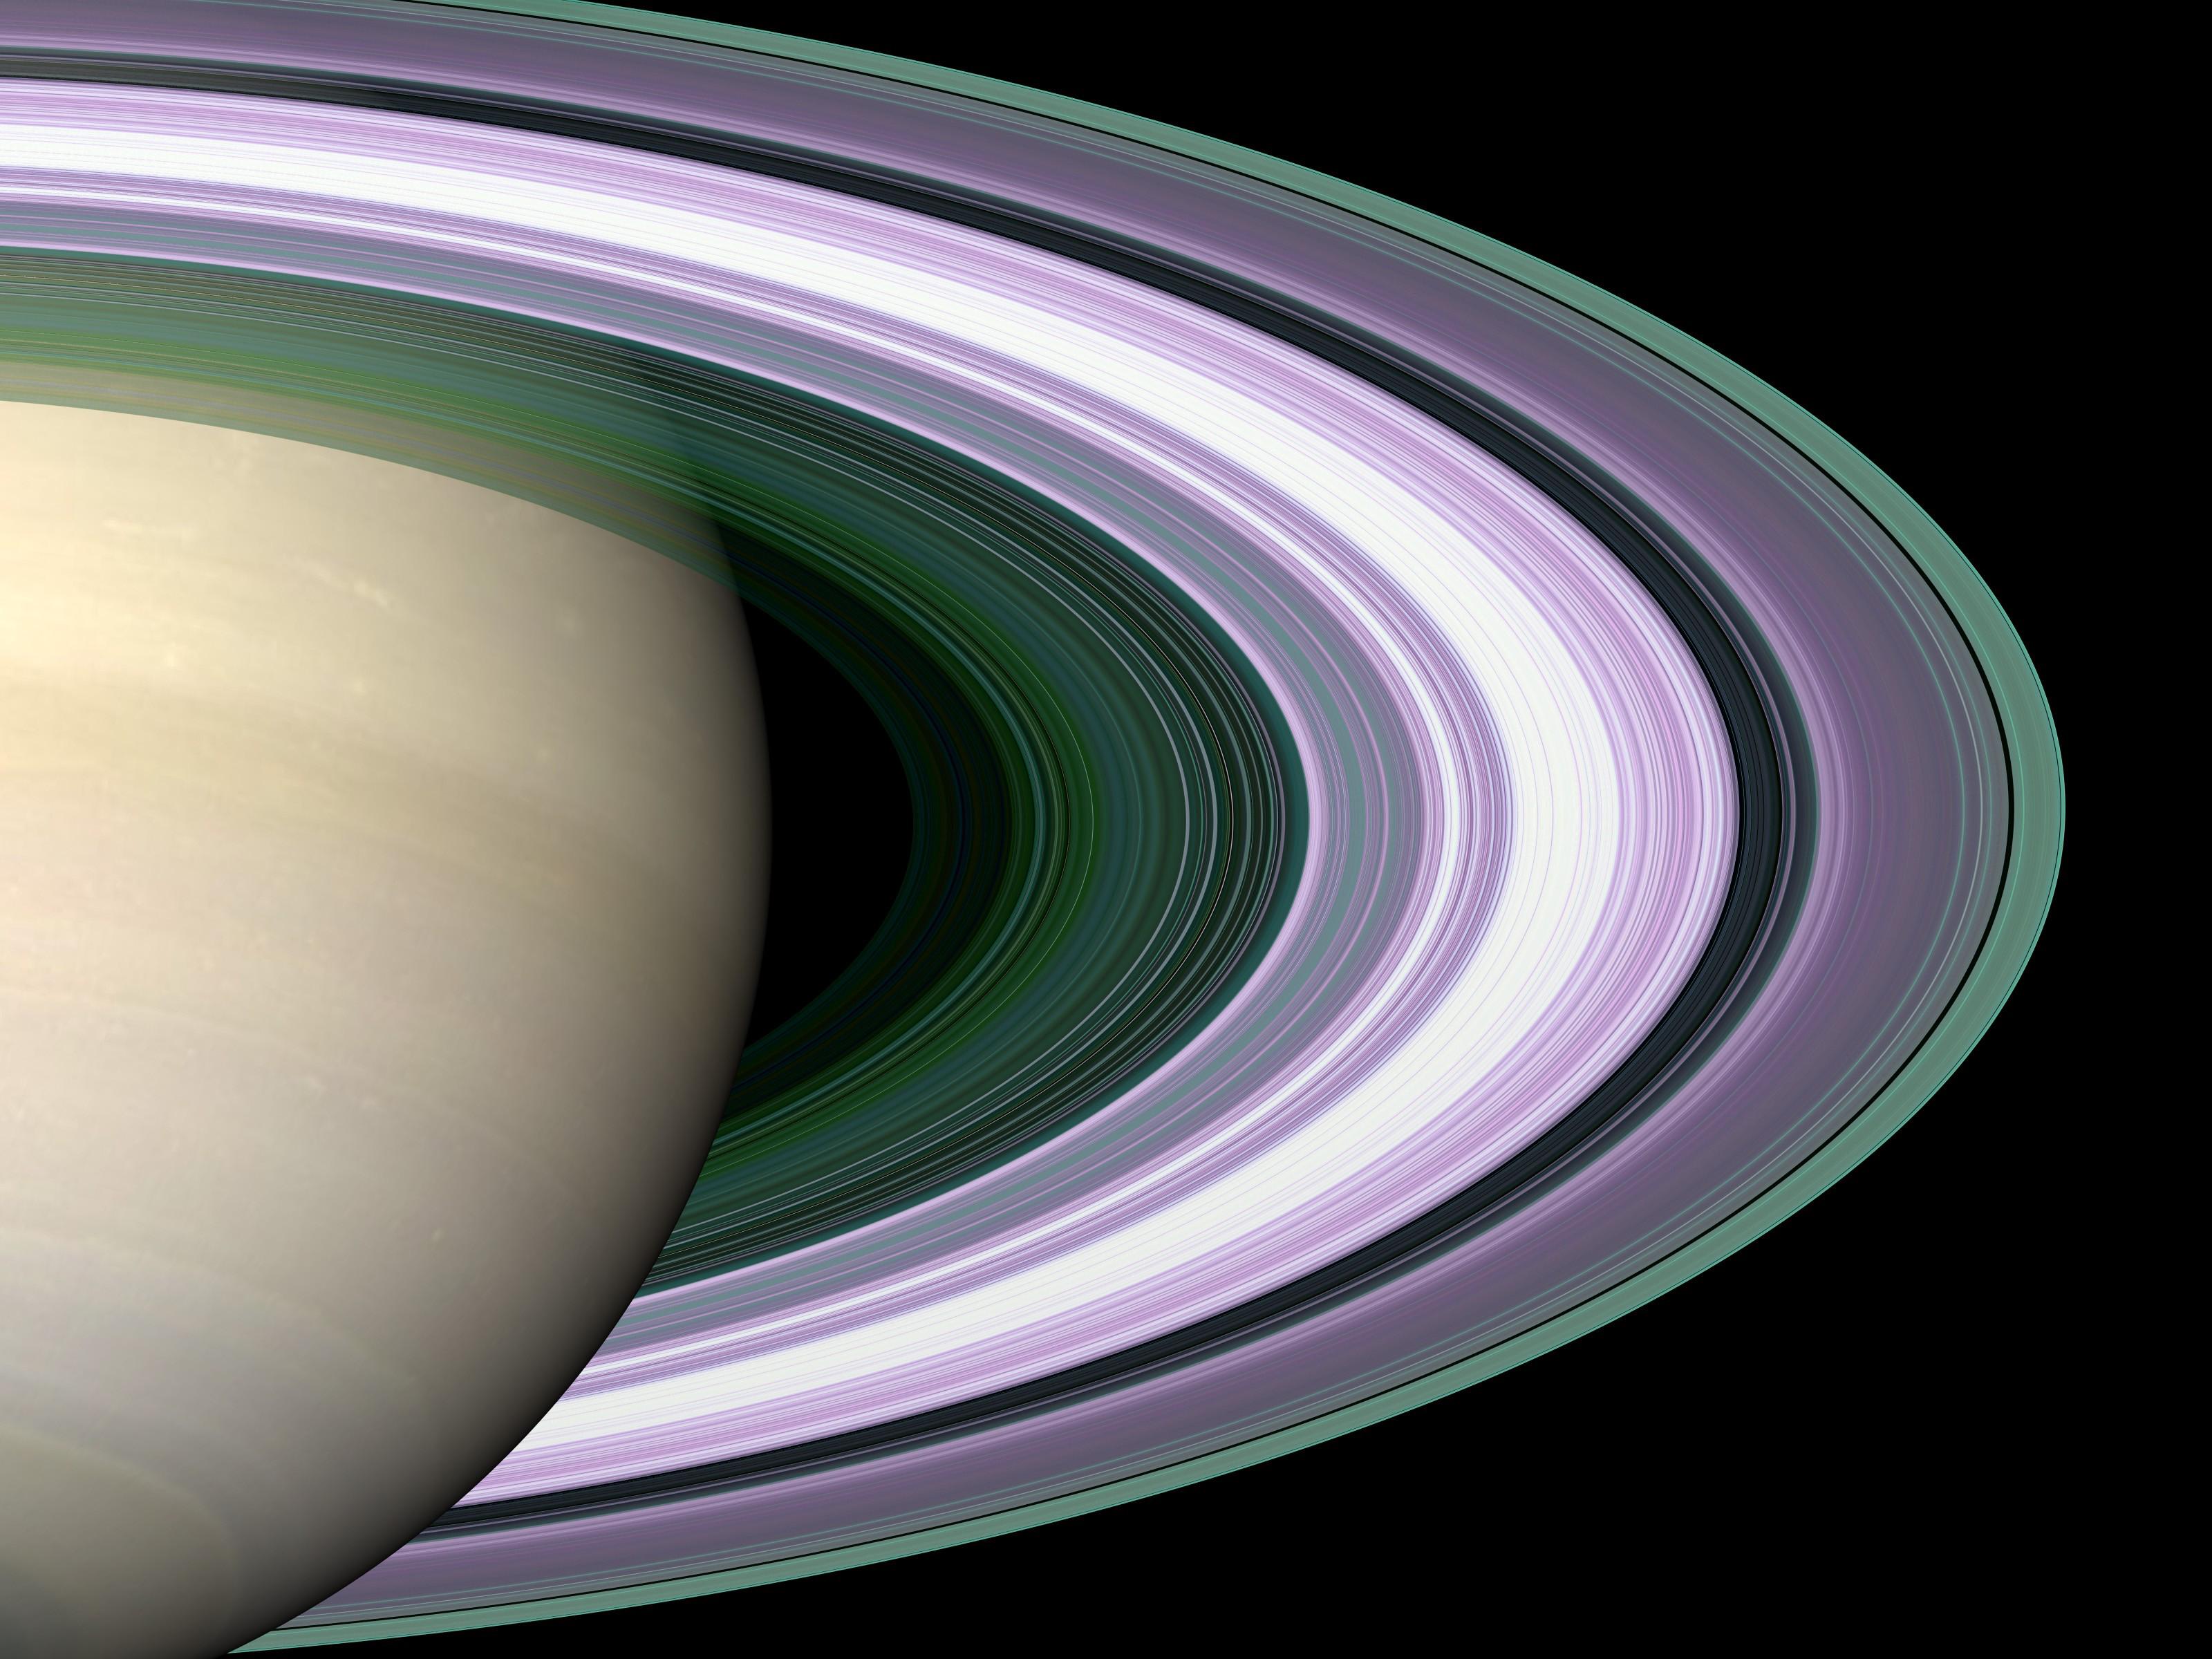 Стационарные планеты. Кольца Сатурна Кассини. Планета Сатурн Кассини кольца. Сатурна НАСА "Кассини". Юпитер Кассини.